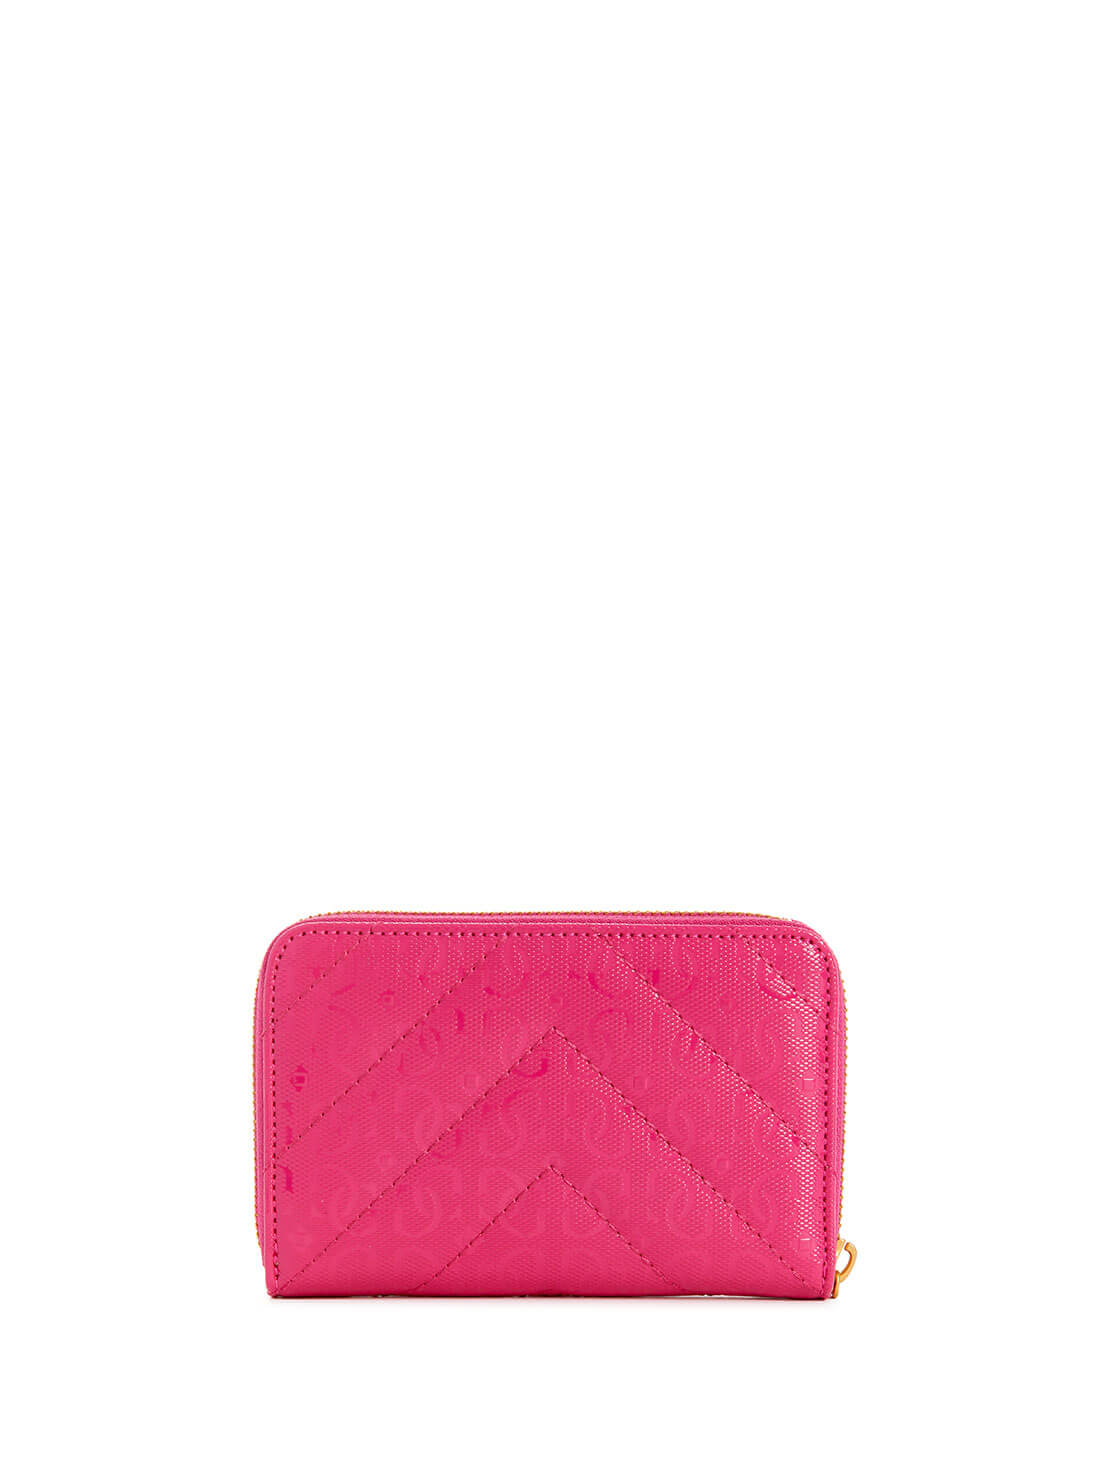 Women's Fuchsia Pink Jania Logo Medium Wallet back view